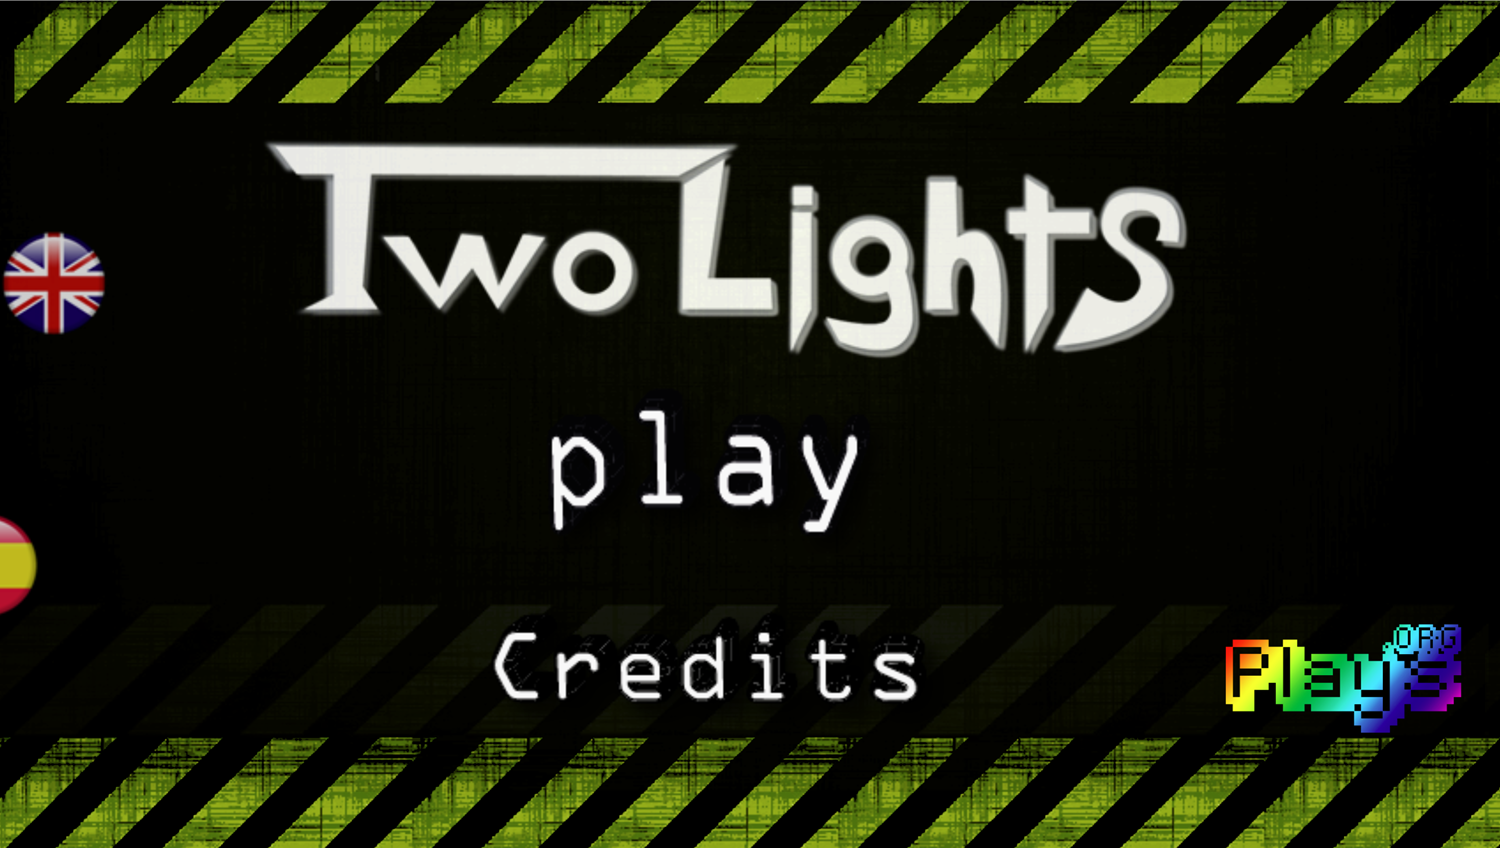 Two Lights Game Welcome Screen Screenshot.